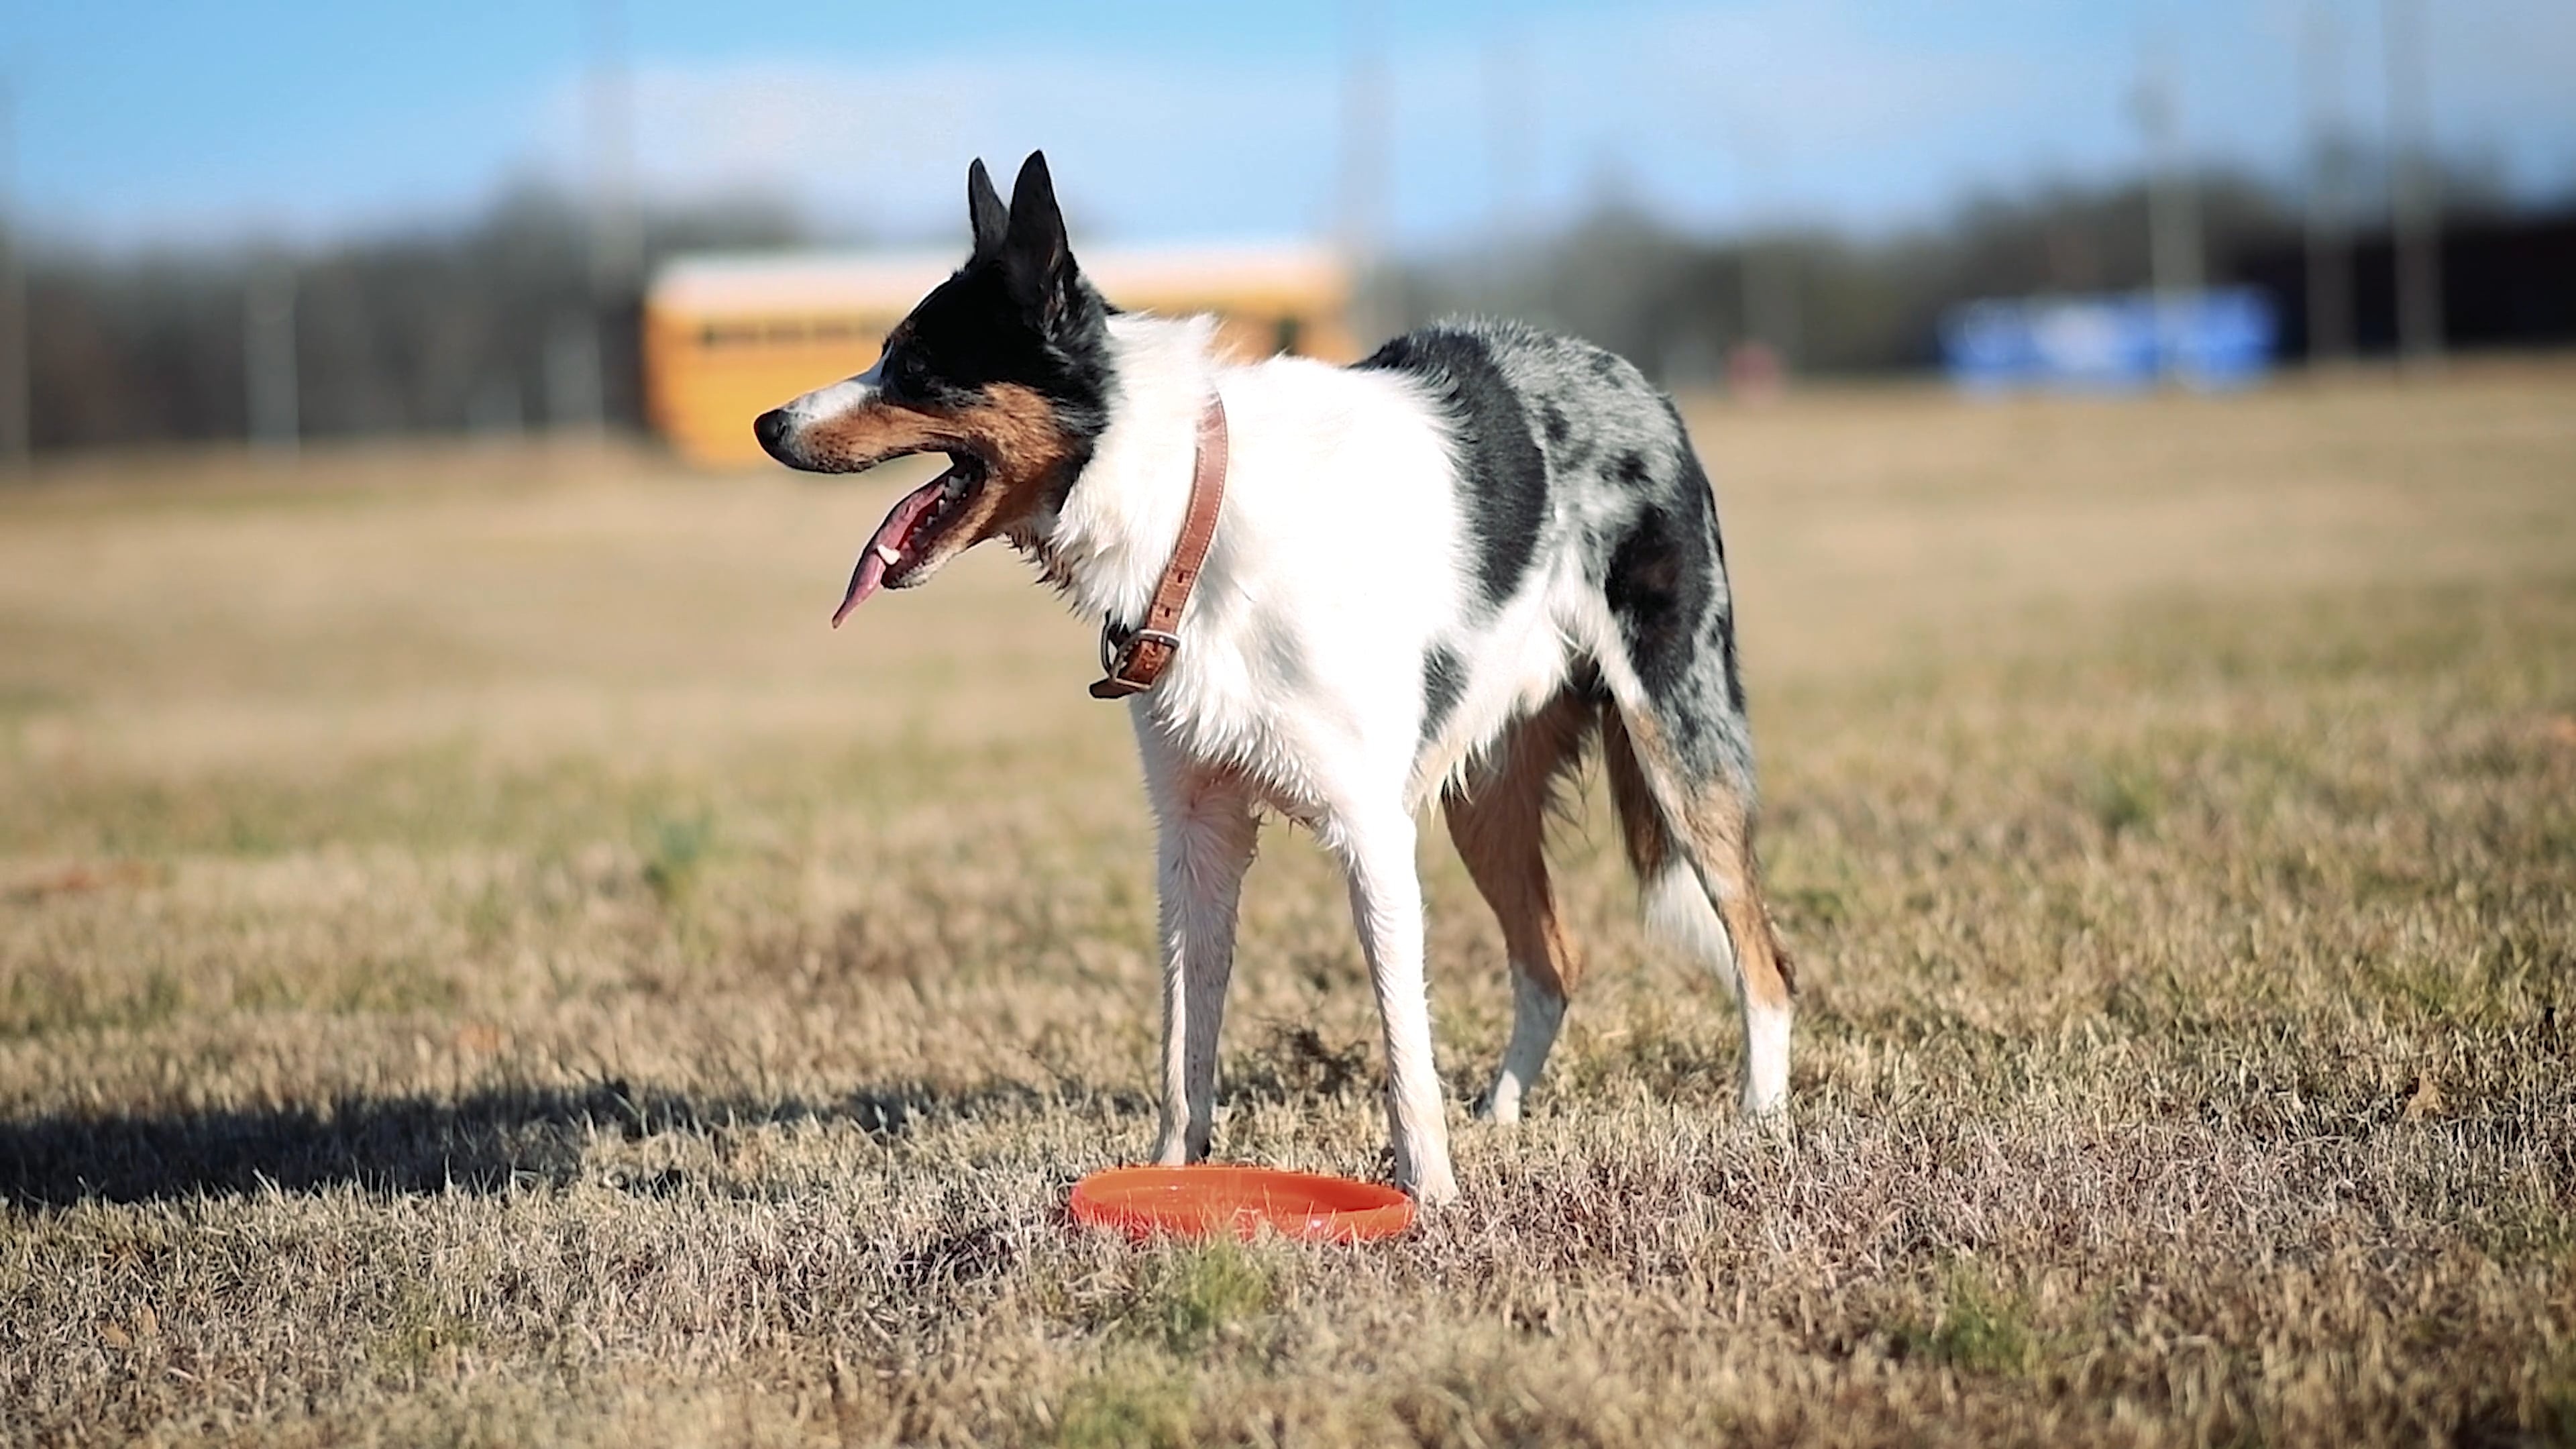 Dog Sports: Dog Catching a Frisbee, Disc Dog, Championship Series. 3840x2160 4K Wallpaper.